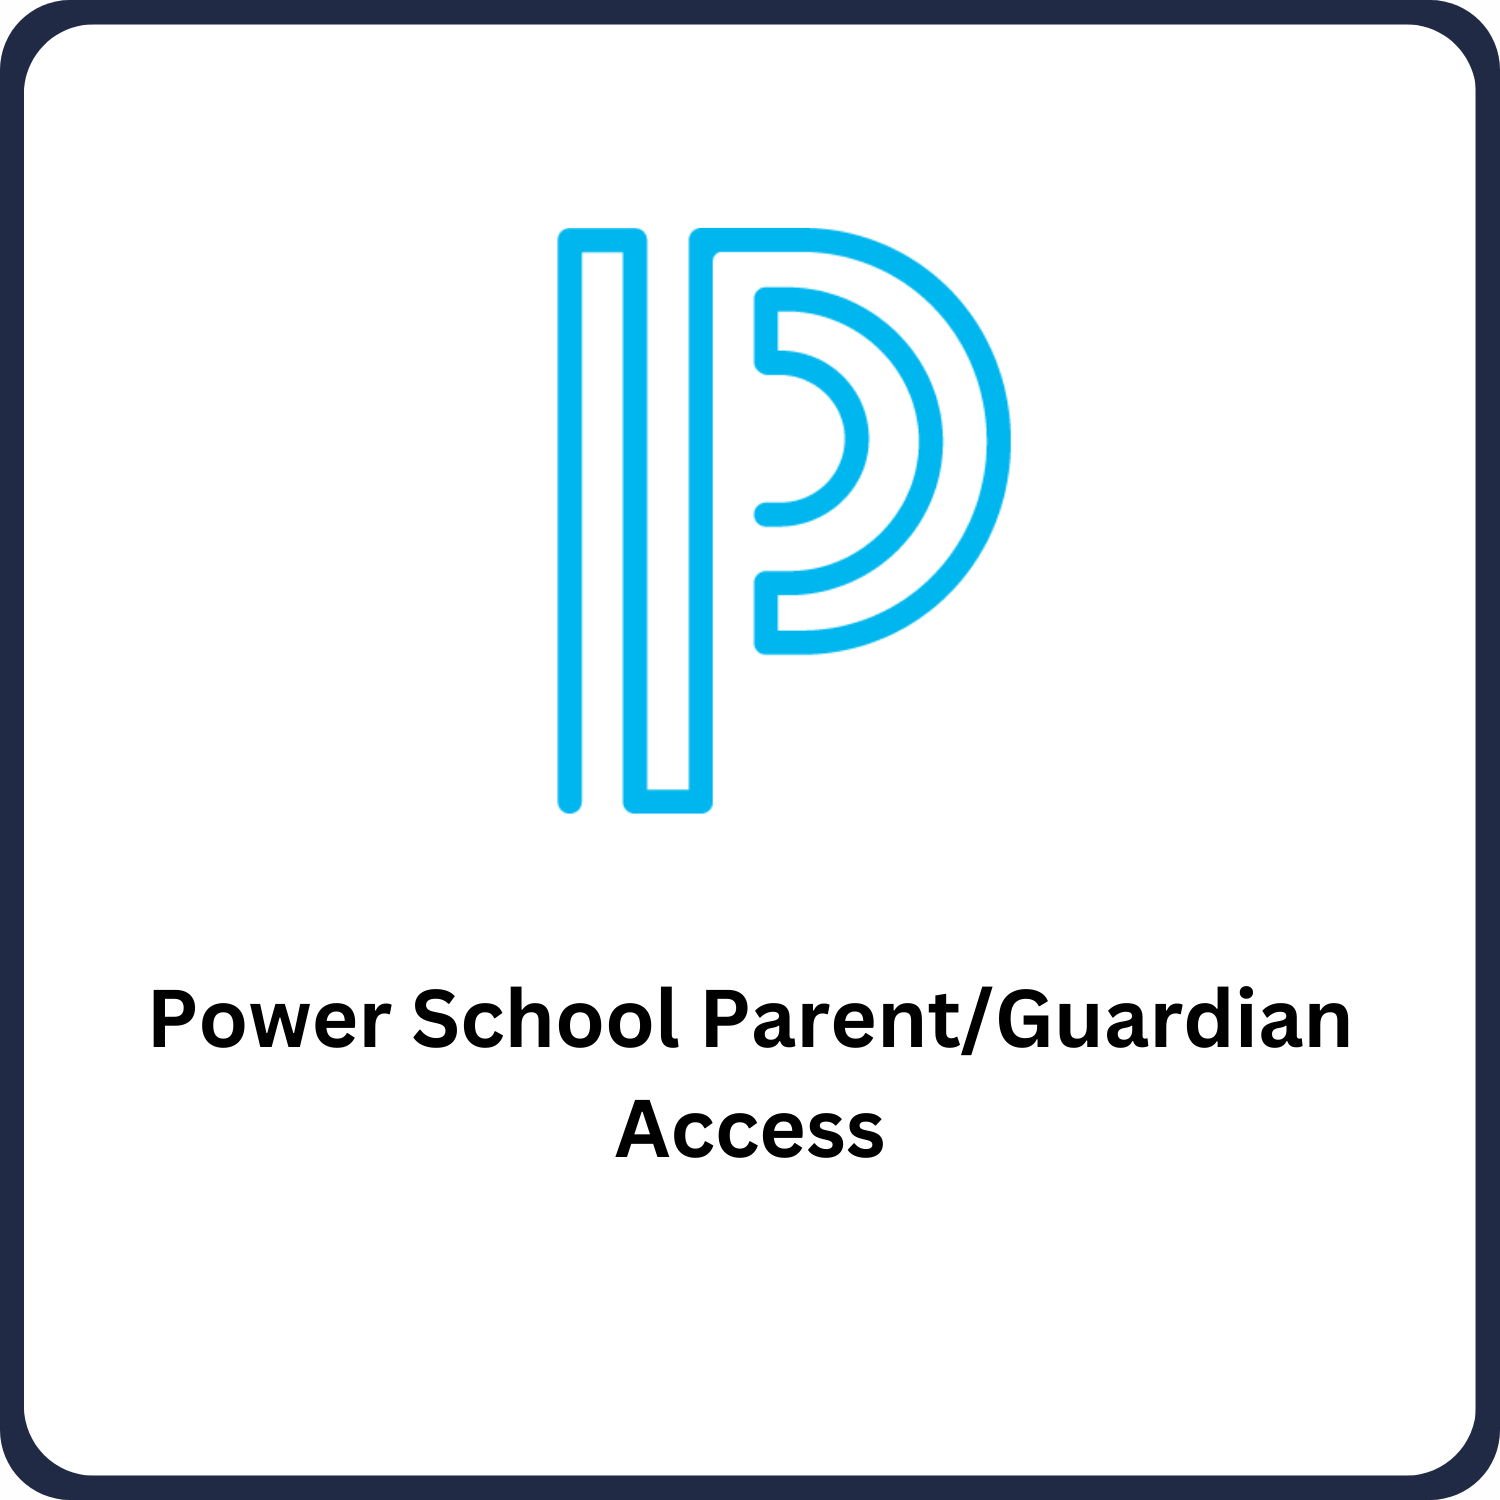 Power School Parent/Guardian Access